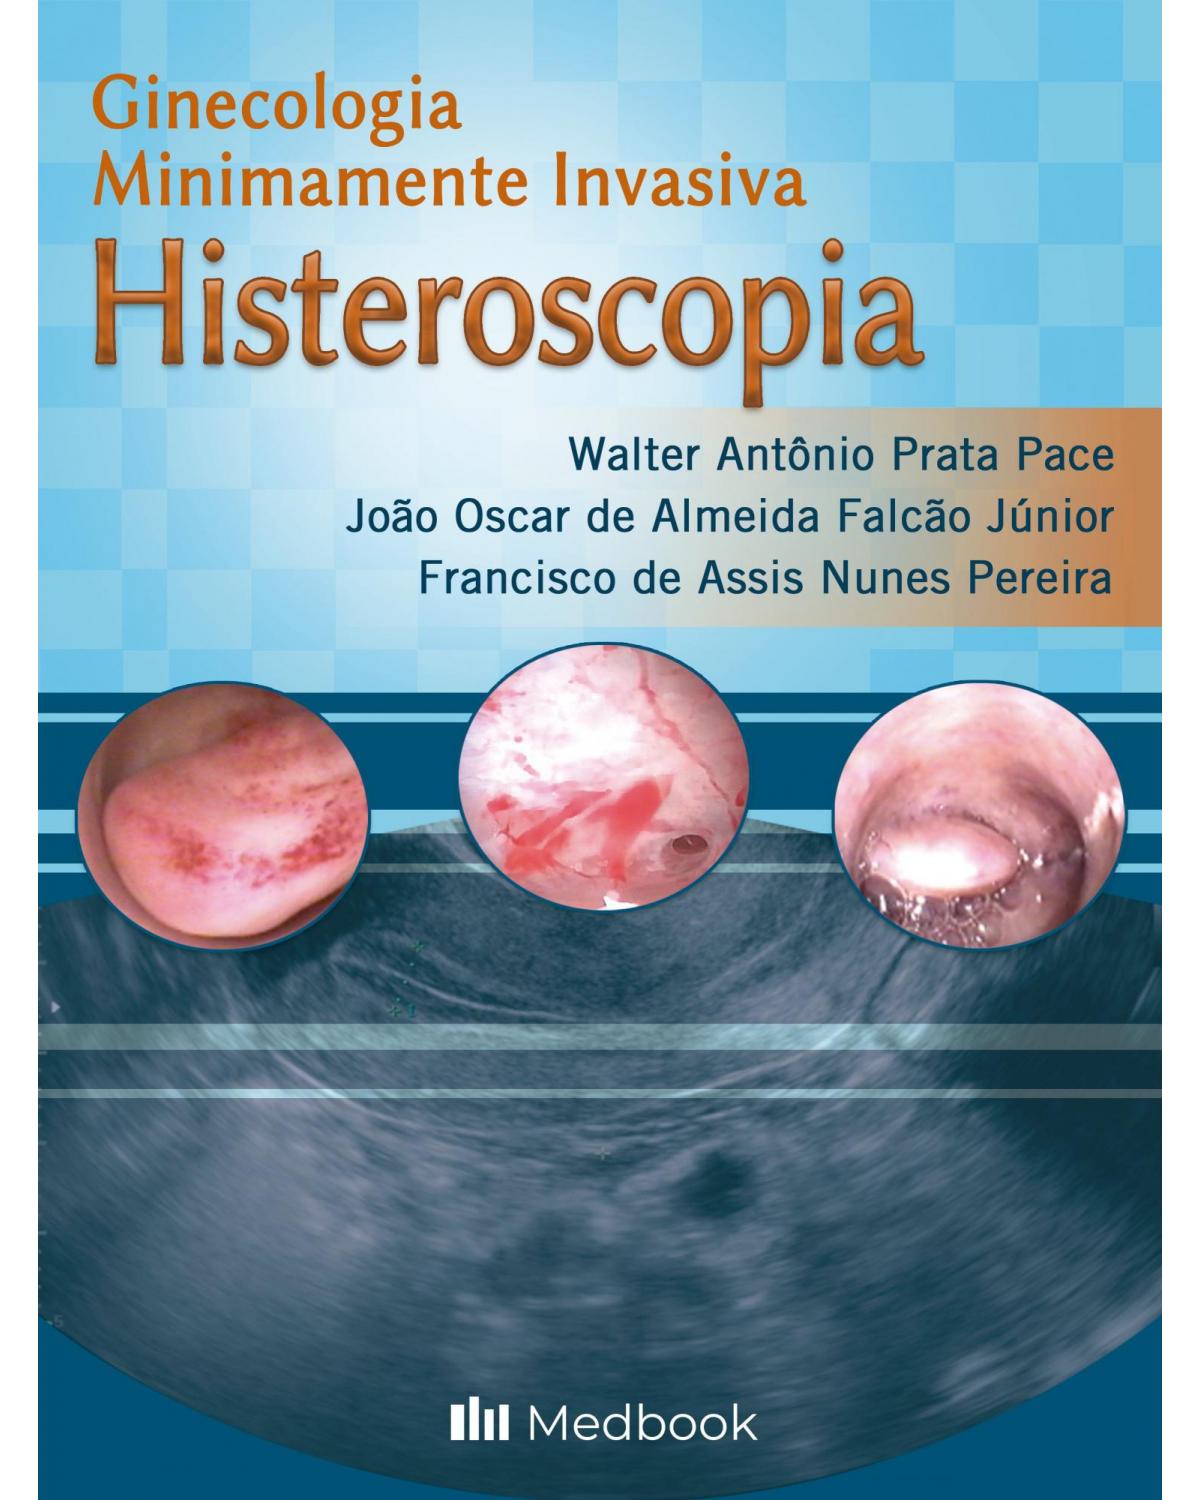 Histeroscopia - Ginecologia minimamente invasiva - 1ª Edição | 2021